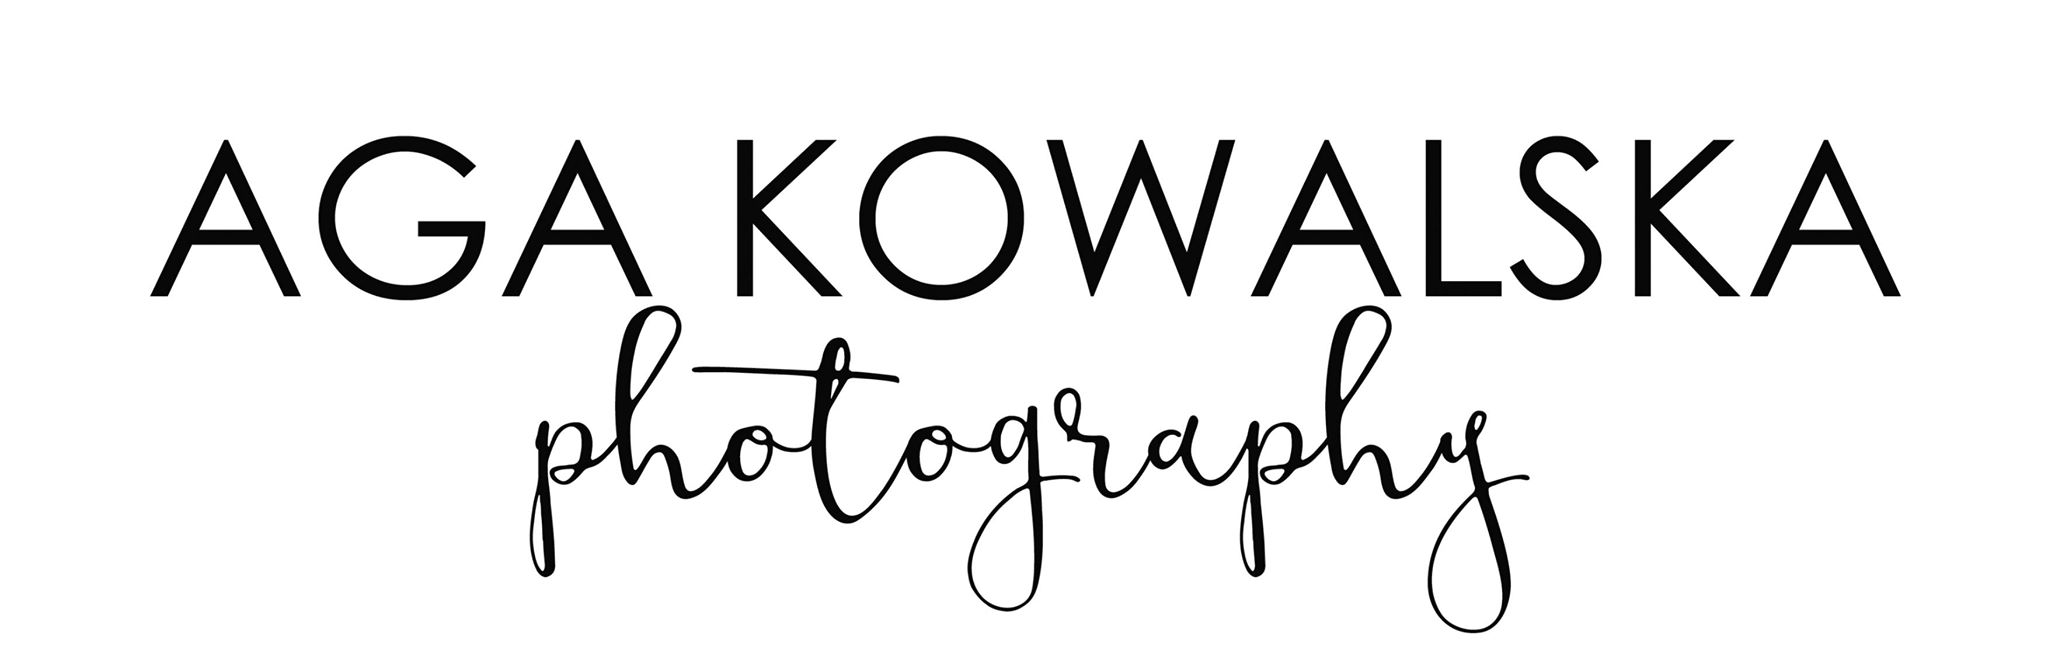 Aga Kowalska Photography Exeter, Devon, Specialist Family & Wedding Photographer